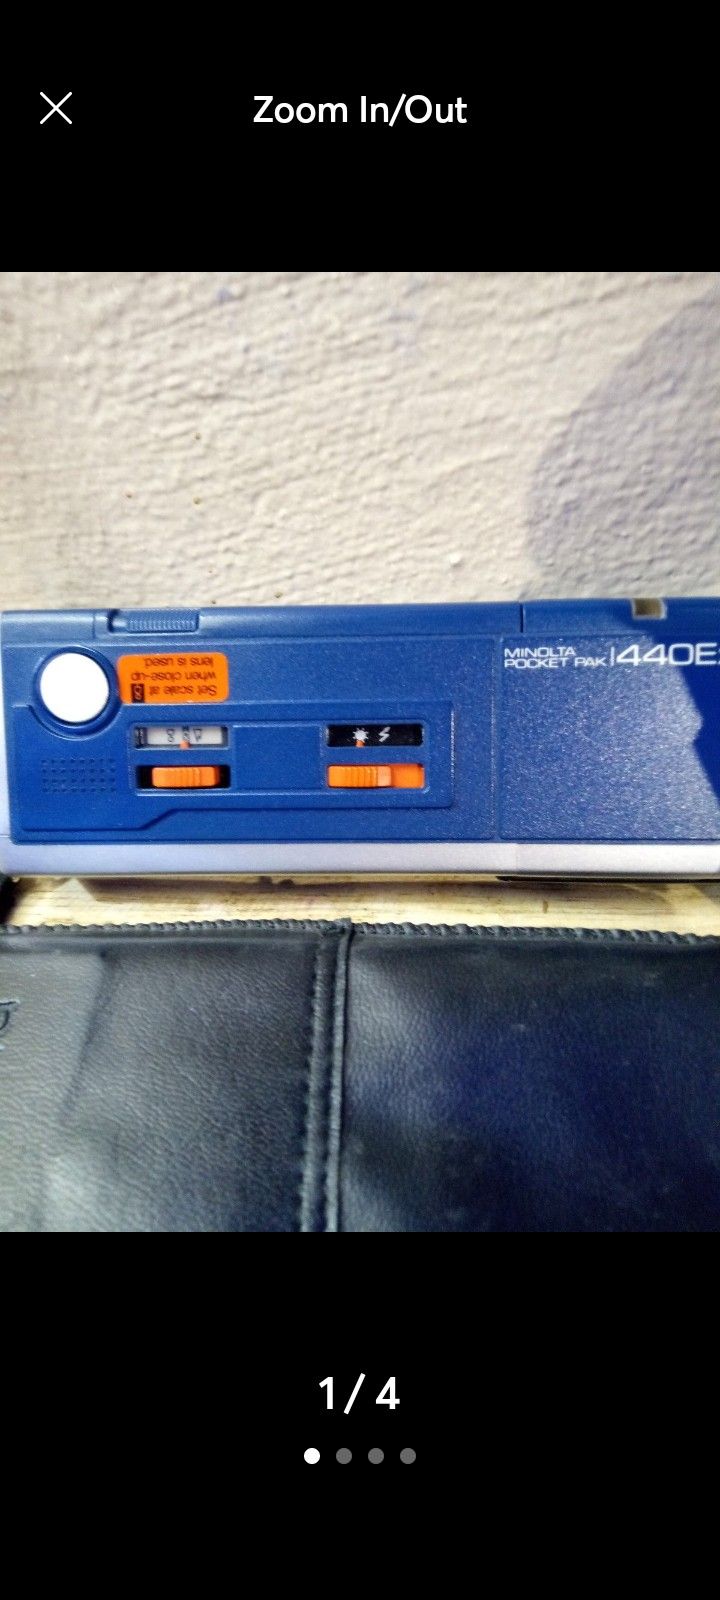 Minolta Pocket Pak 440Ex Blue 110 Film Camera w/ Case and Strap